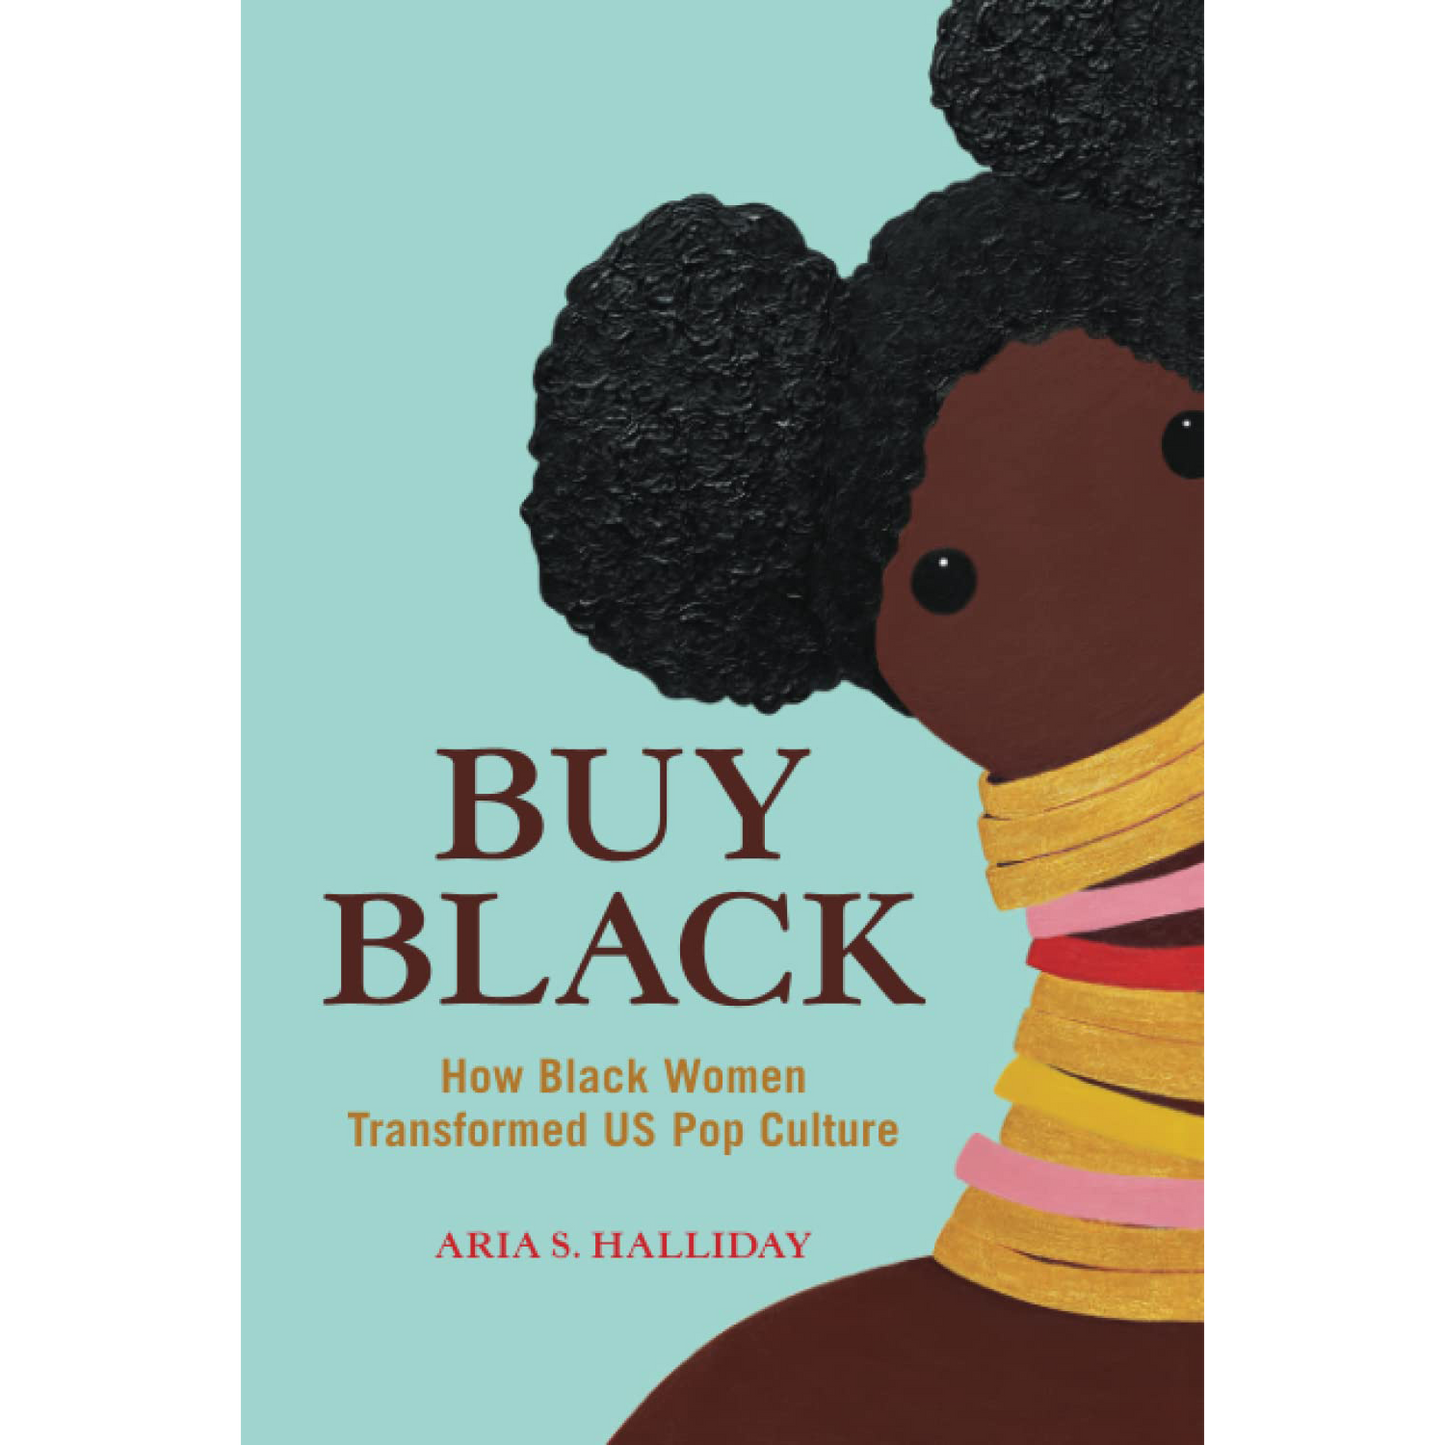 Buy Black: How Black Women Transformed US Pop Culture